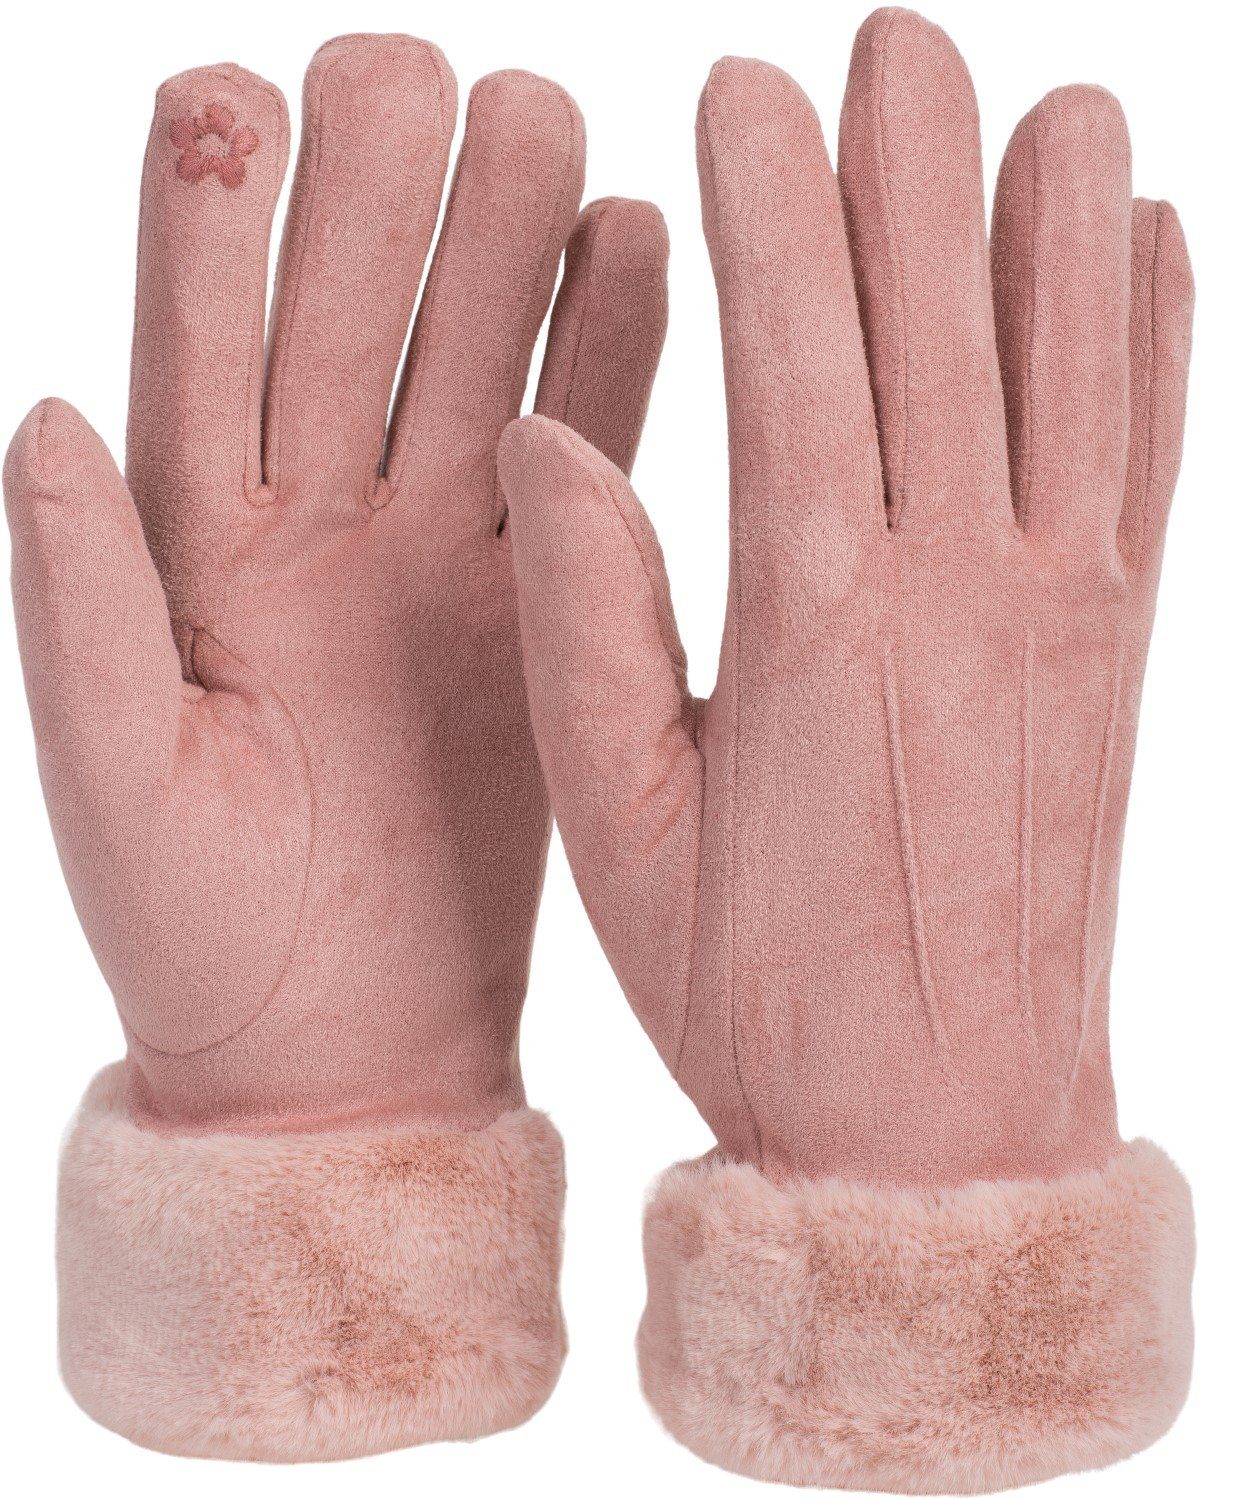 mit Dunkelblau Unifarbene styleBREAKER Fleecehandschuhe Touchscreen Kunstfell Handschuhe